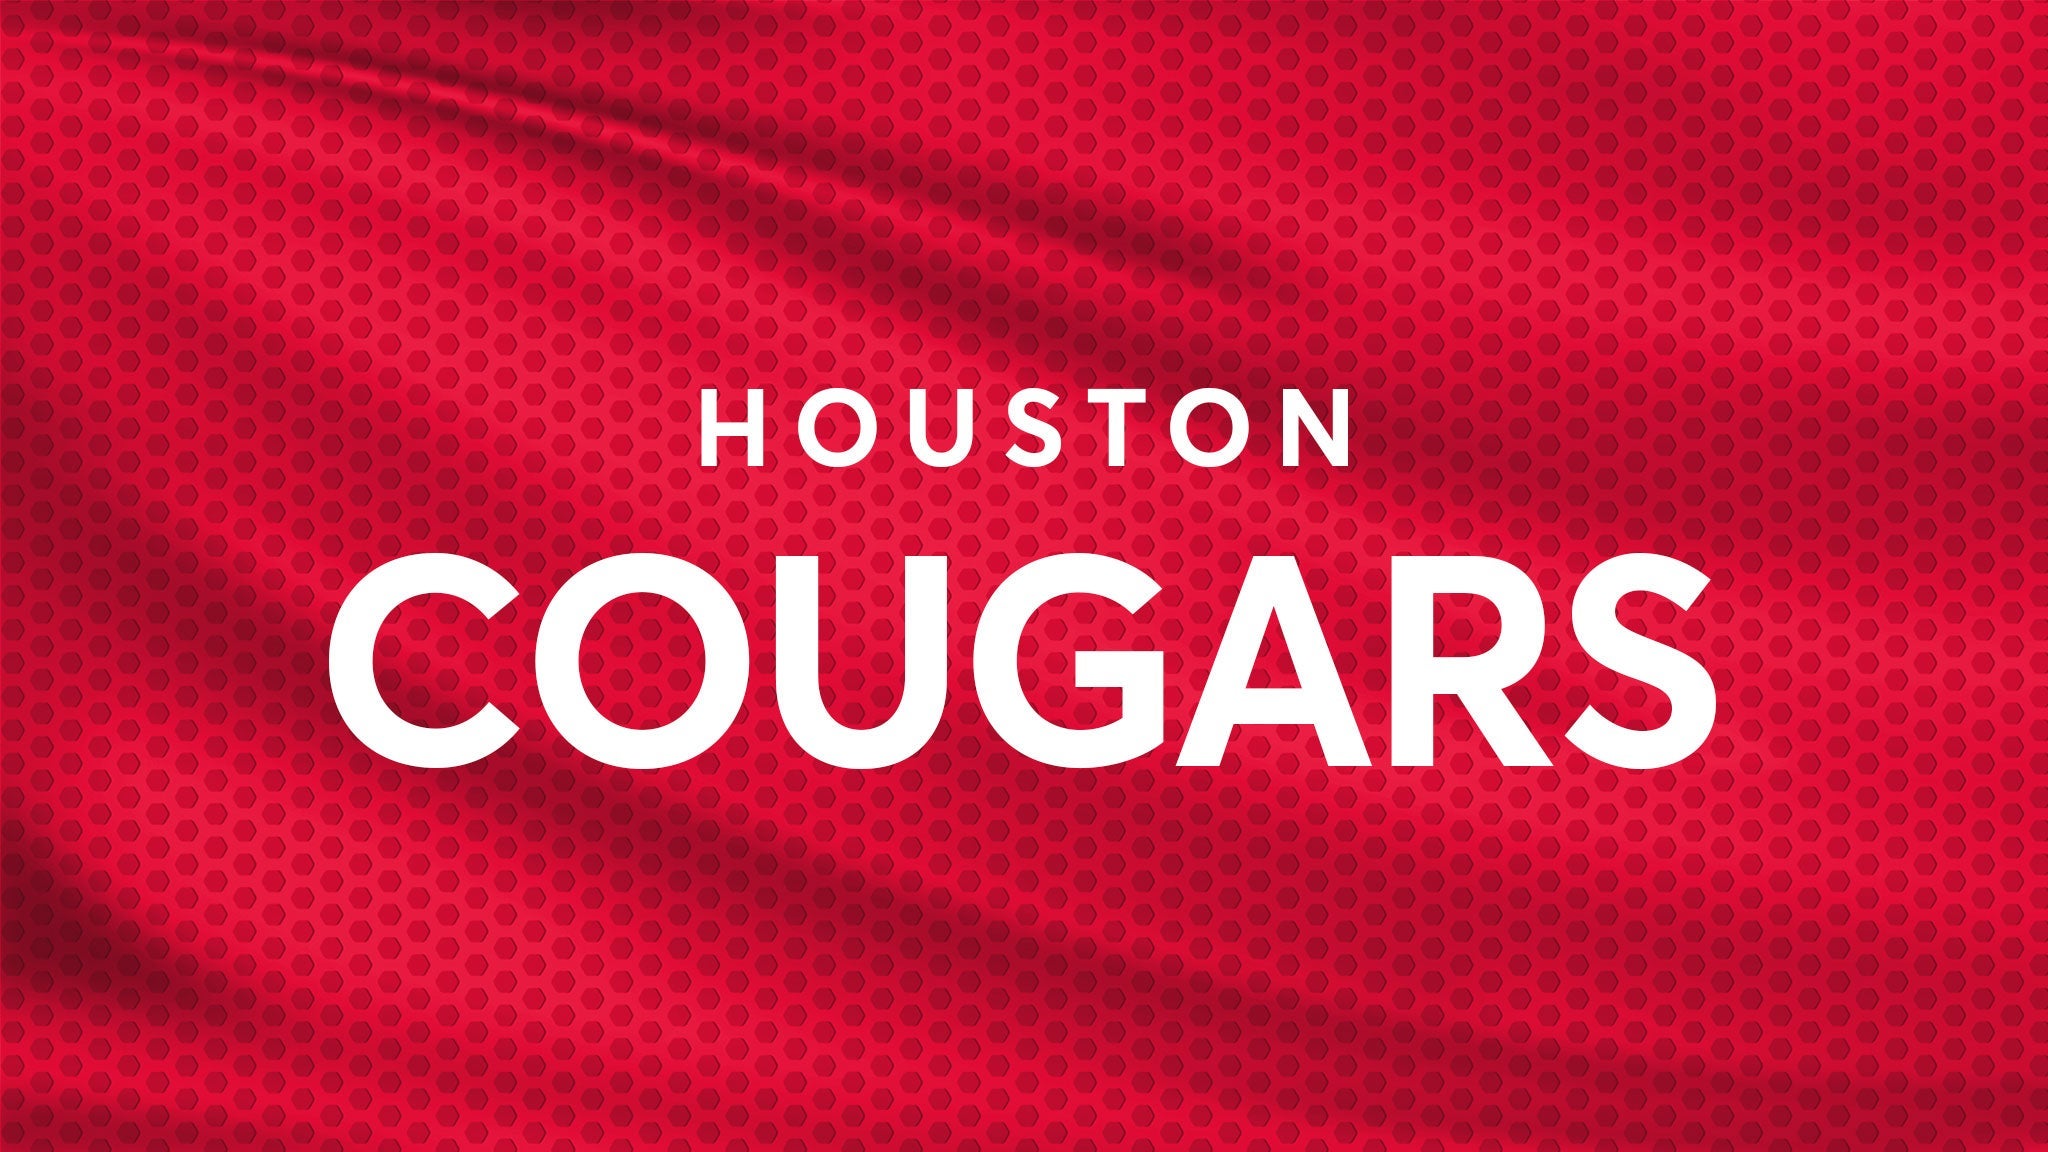 Houston Cougars Football vs. Utah Utes Football hero